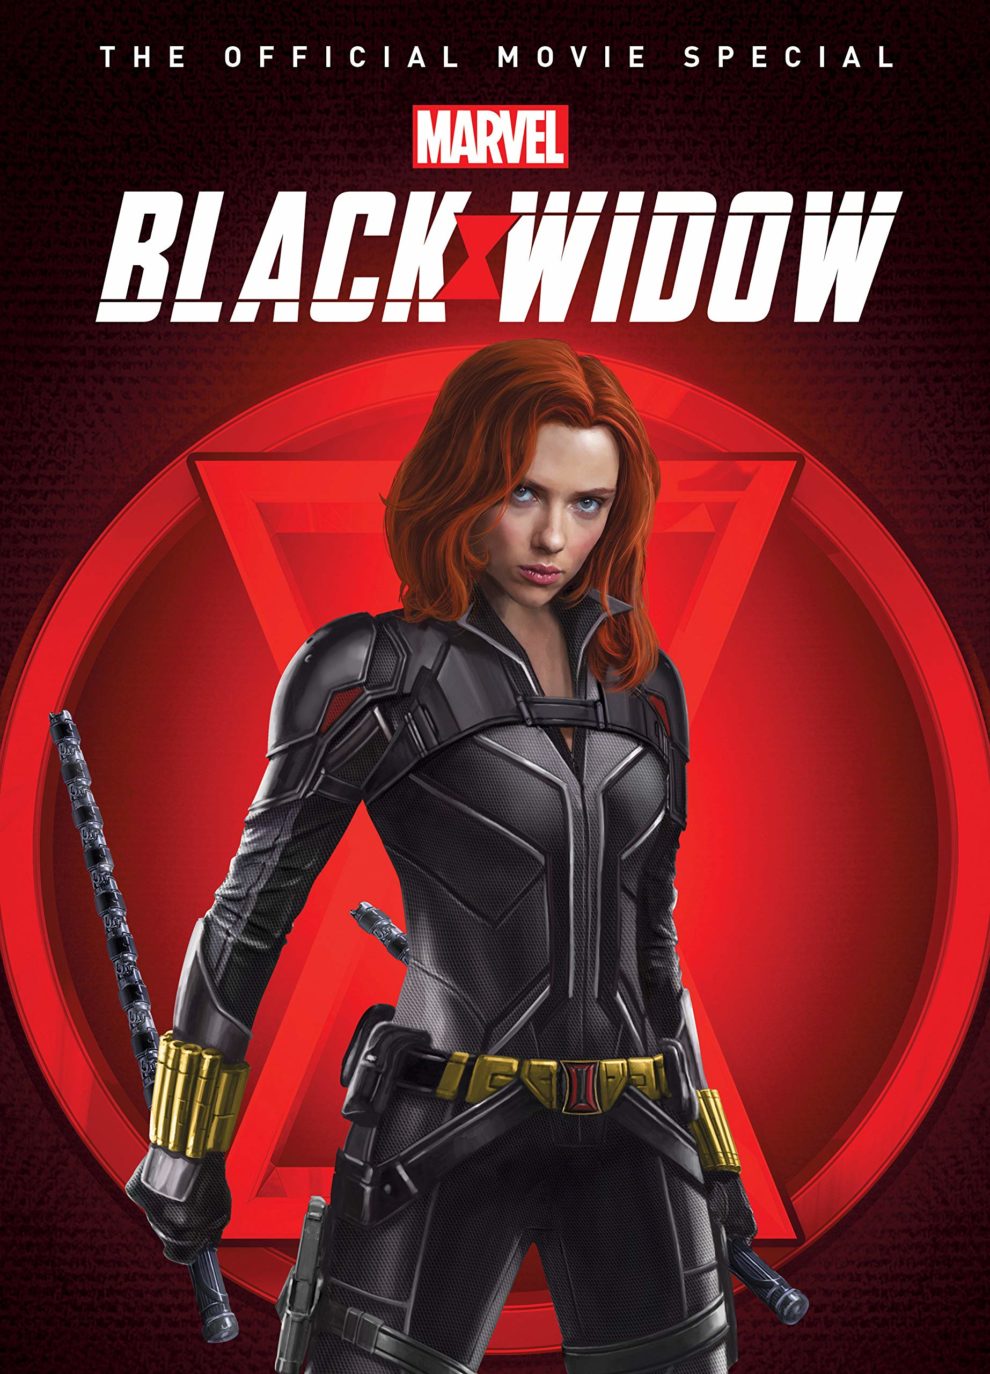 Explained black widow ending